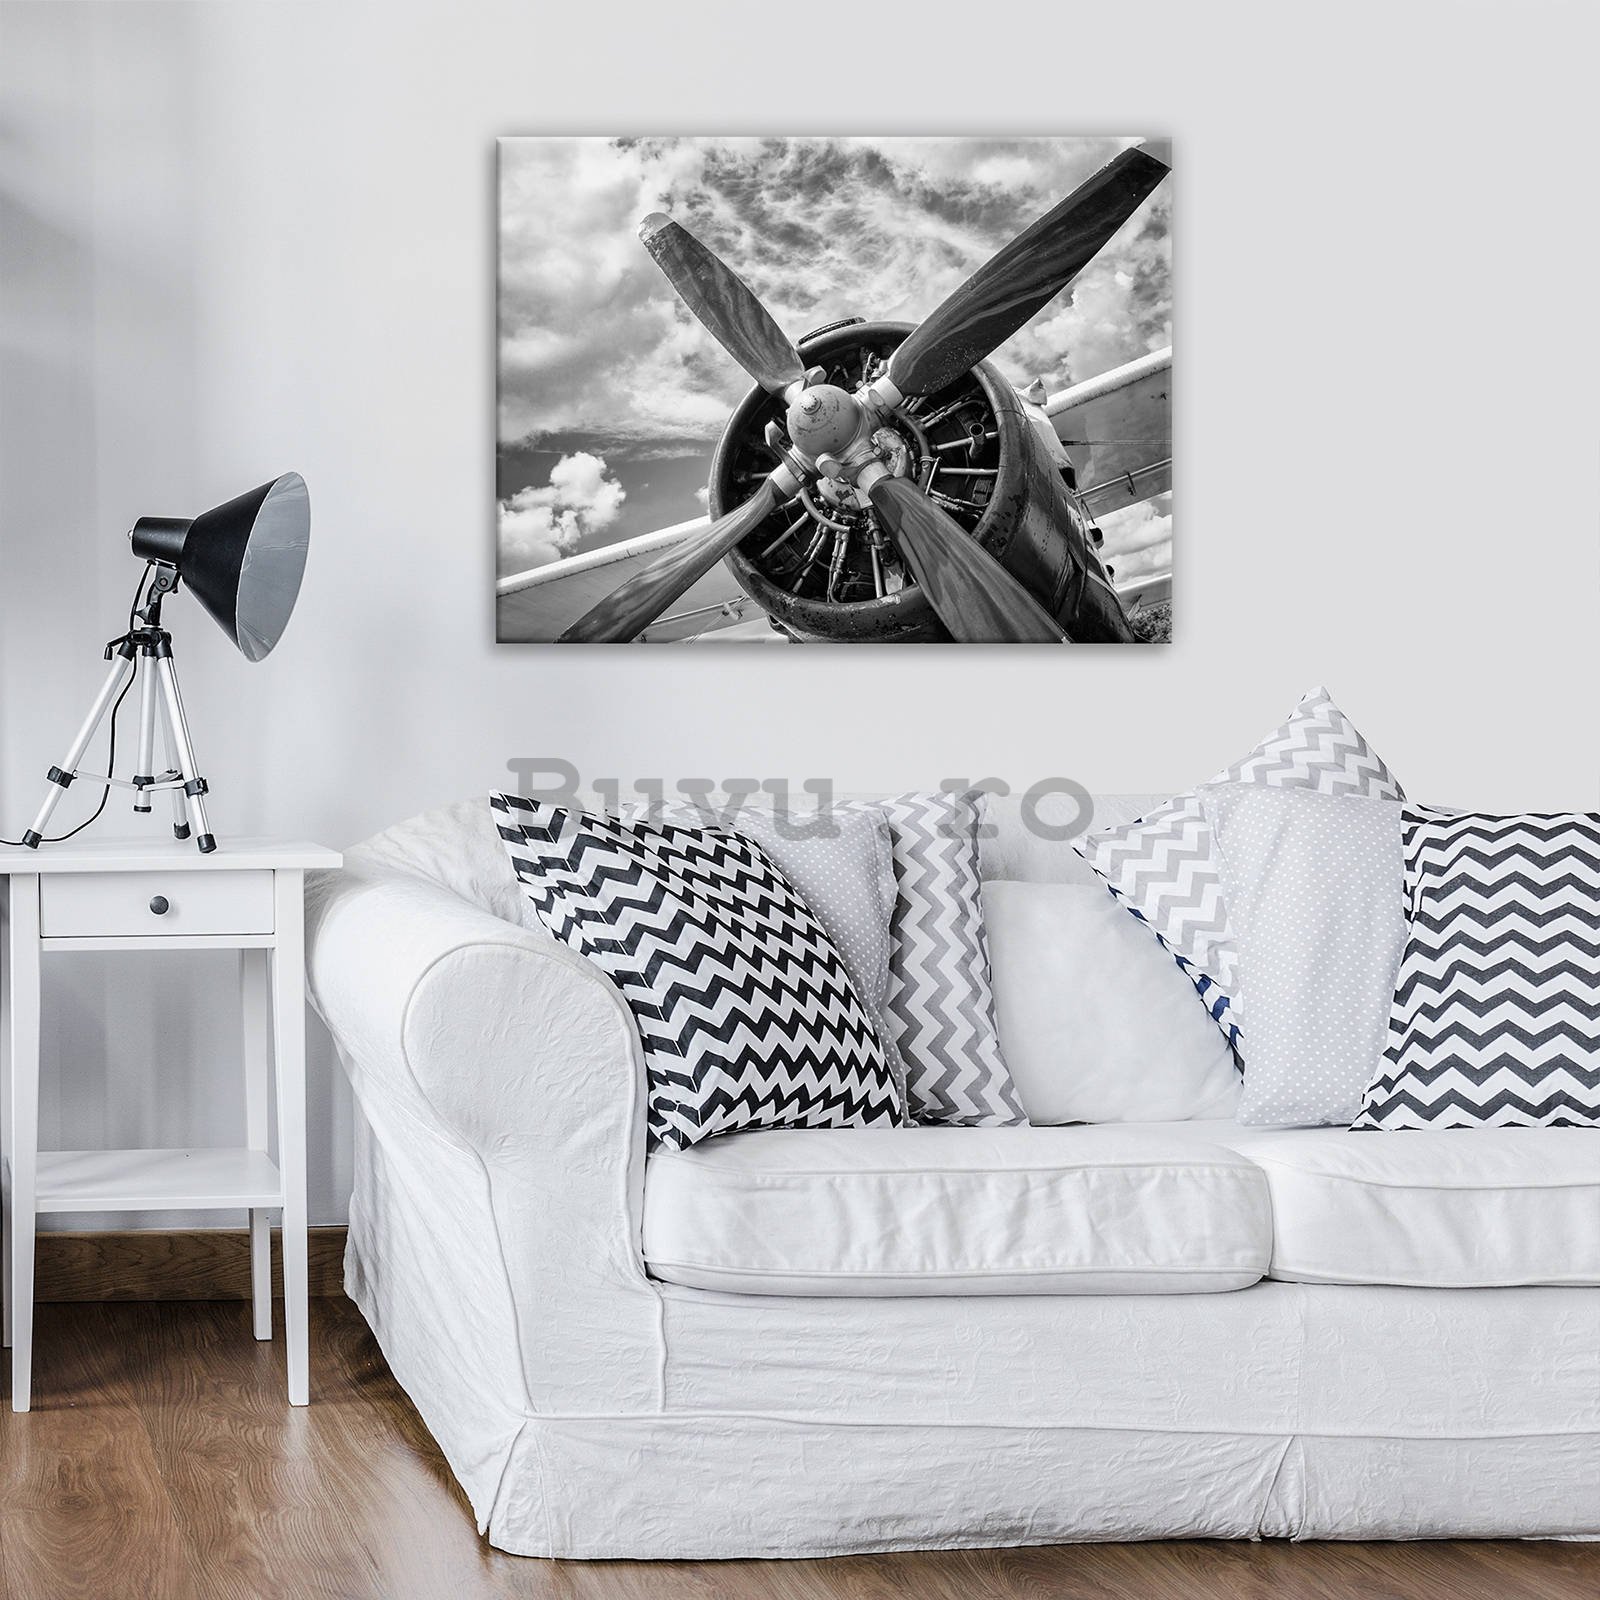 Tablou canvas: Detaliu al unui avion - 80x60 cm